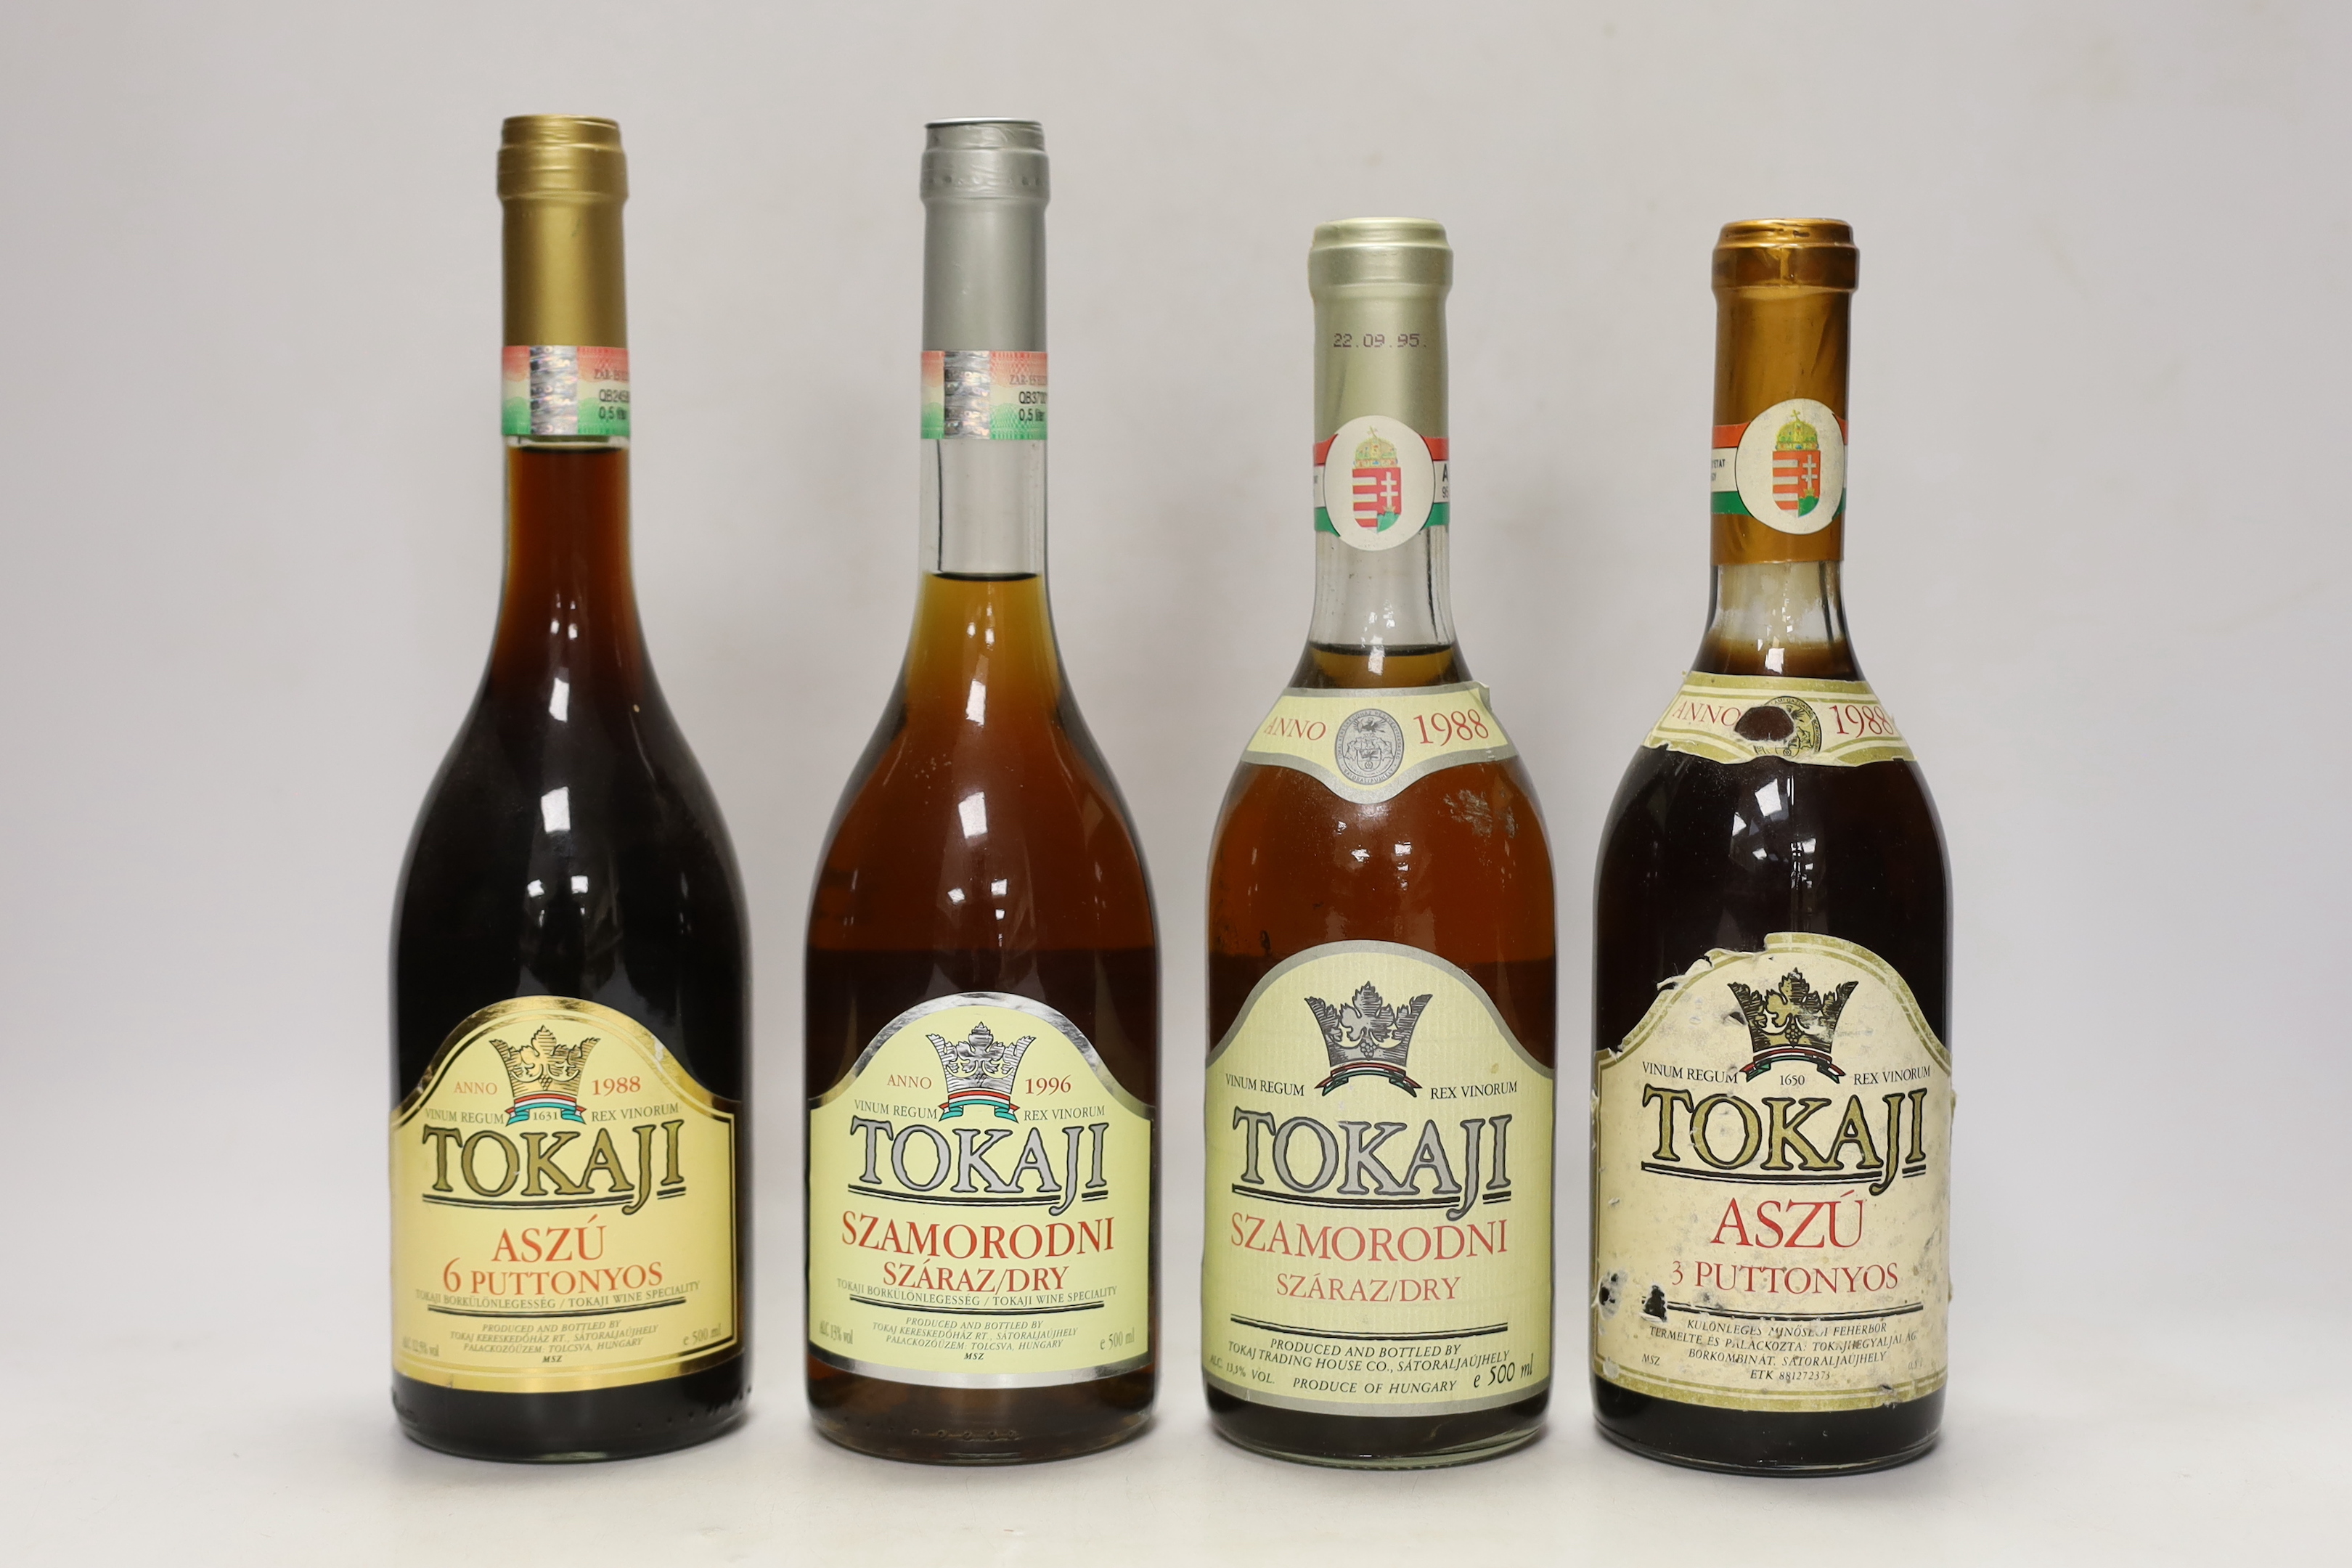 One bottle of Tokaji Szamorodni Szaraz, 1996, one bottle of Tokaji Szamorodni Szaraz, 1988, one bottle of Tokaji Aszu 6 Puttonyos, 1988 and one bottle of Tokaji Aszu 3 Puttonyos, 1988.